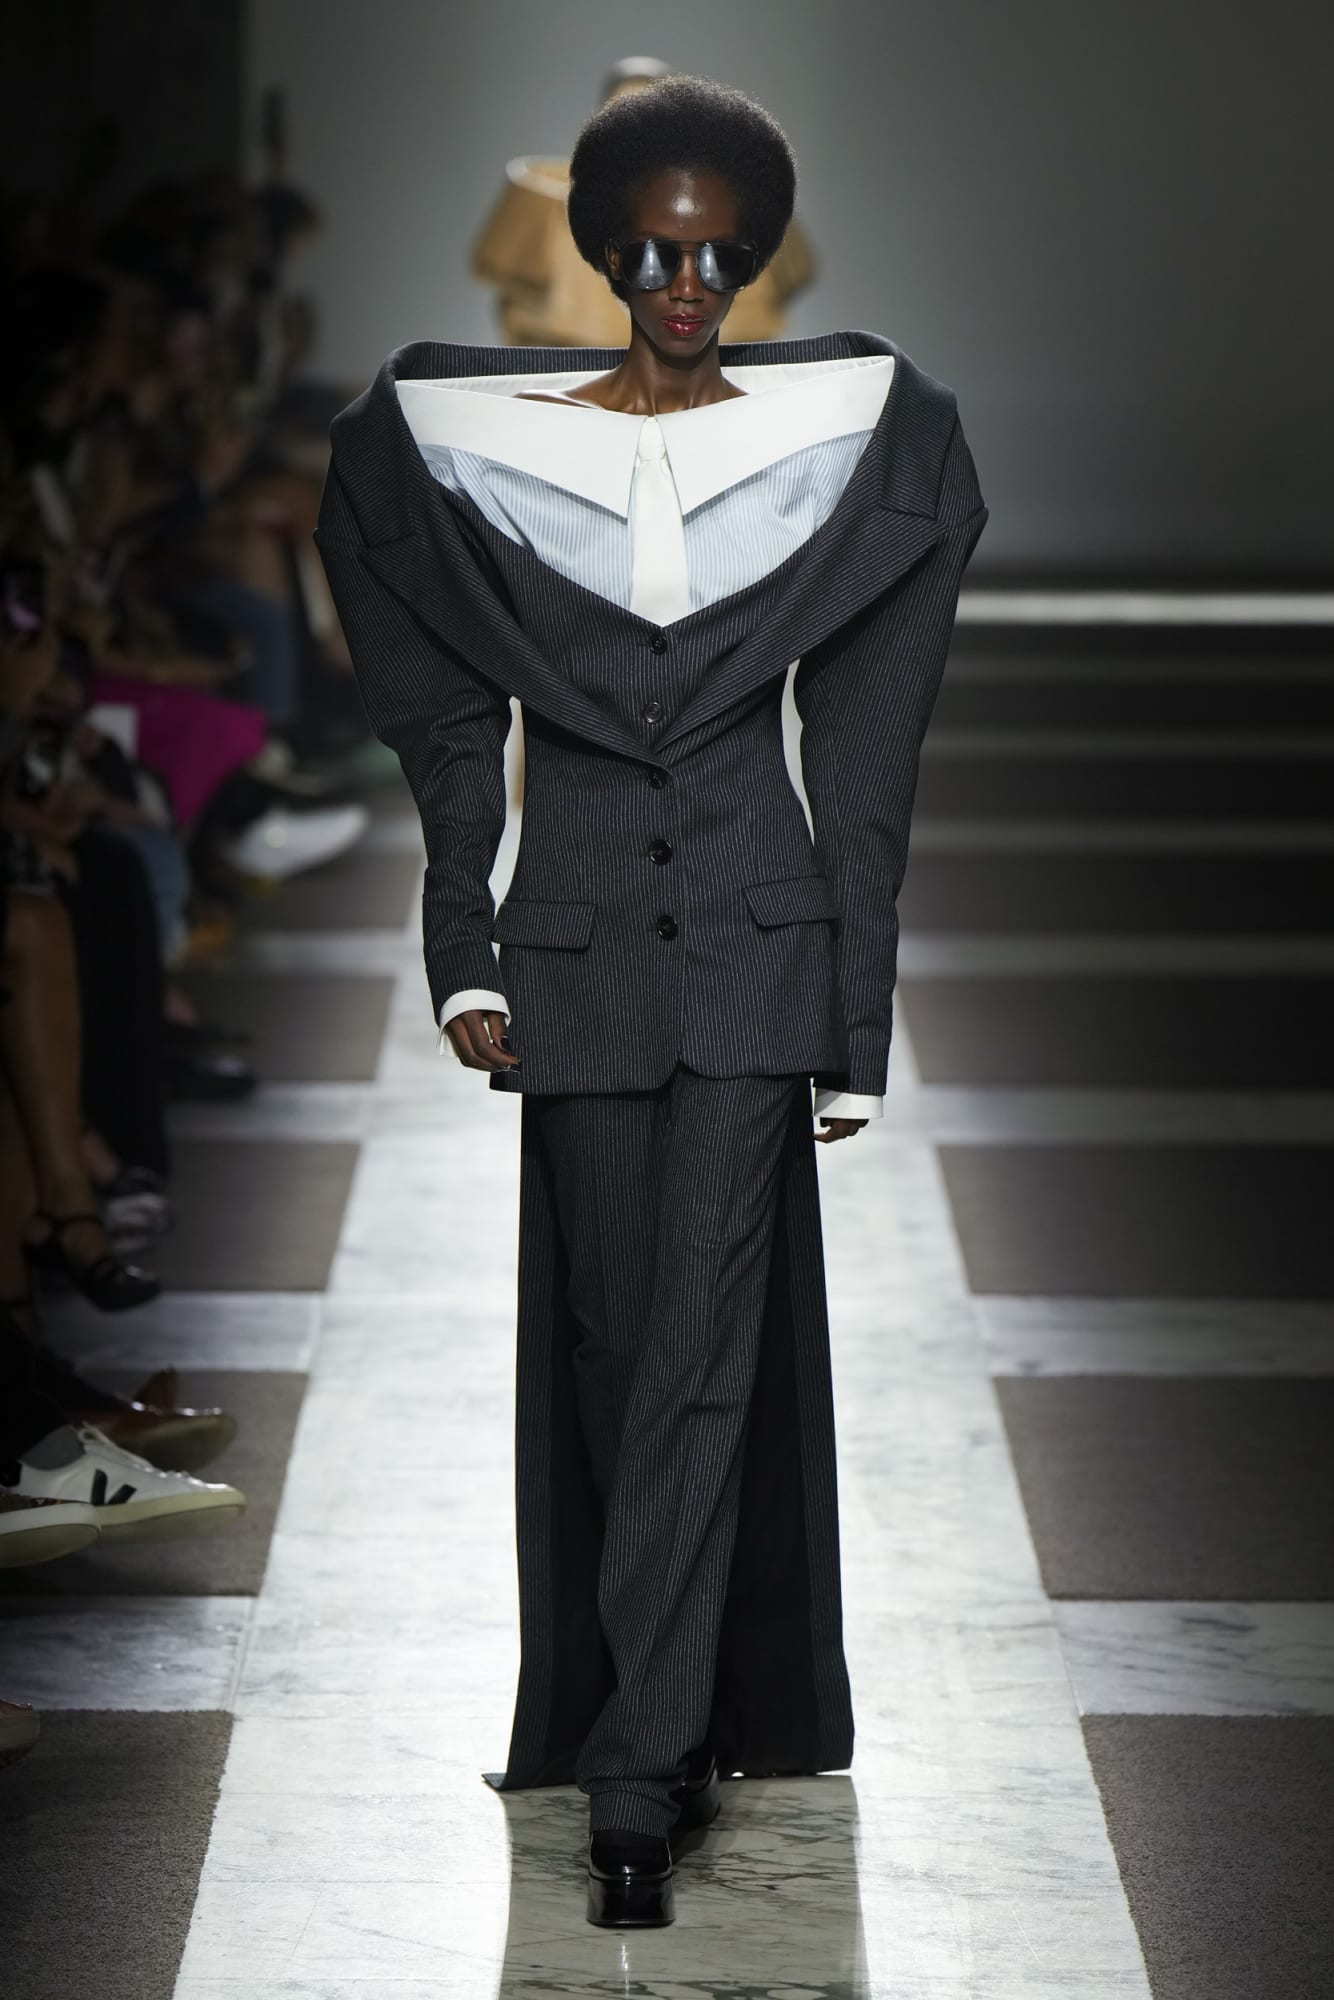  Viktor & Rolf model sports an oversized jacket for Paris Fashion Week 2022.